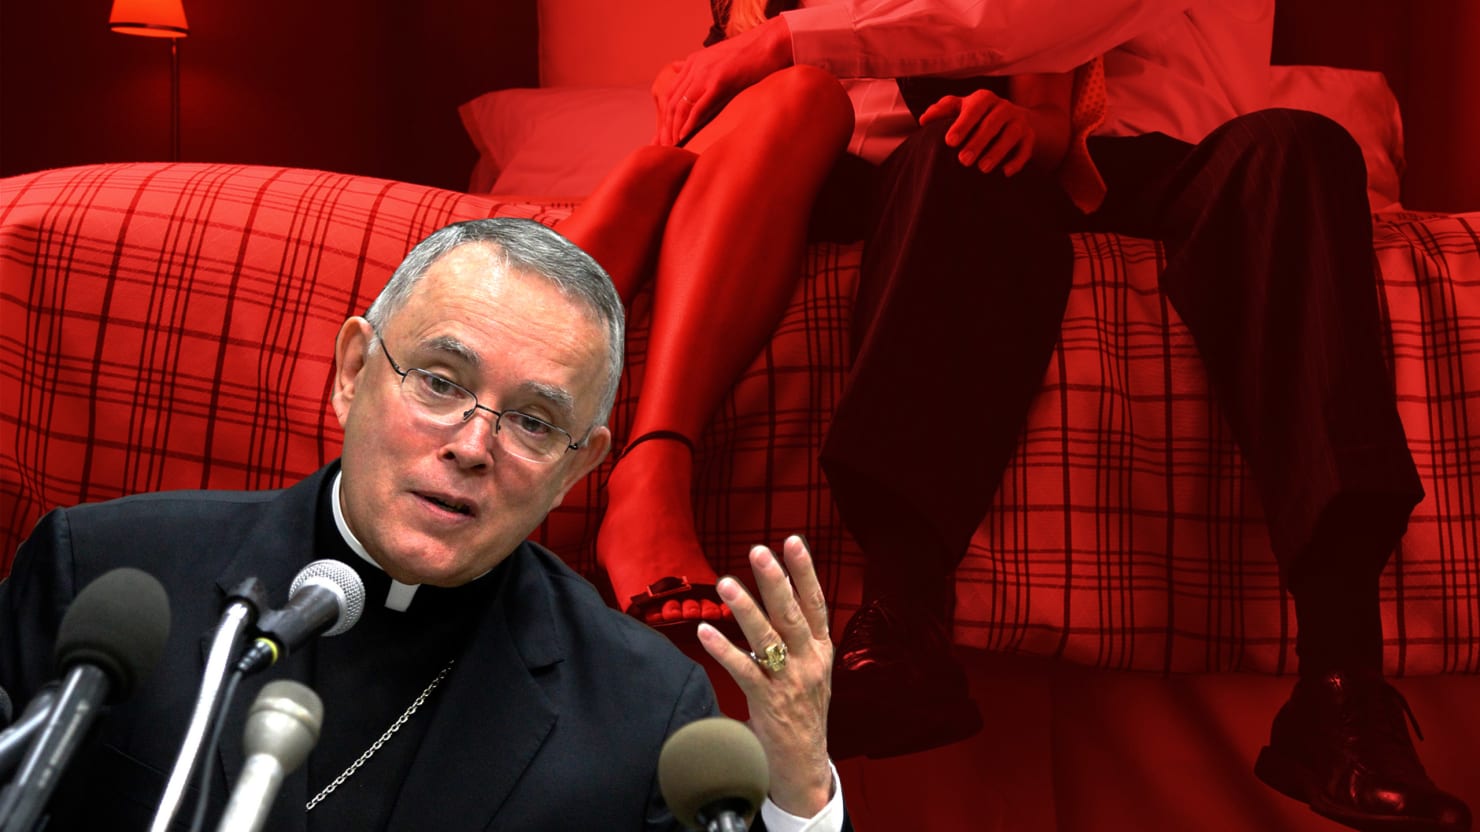 Catholic Bishop Wants to Ban Married